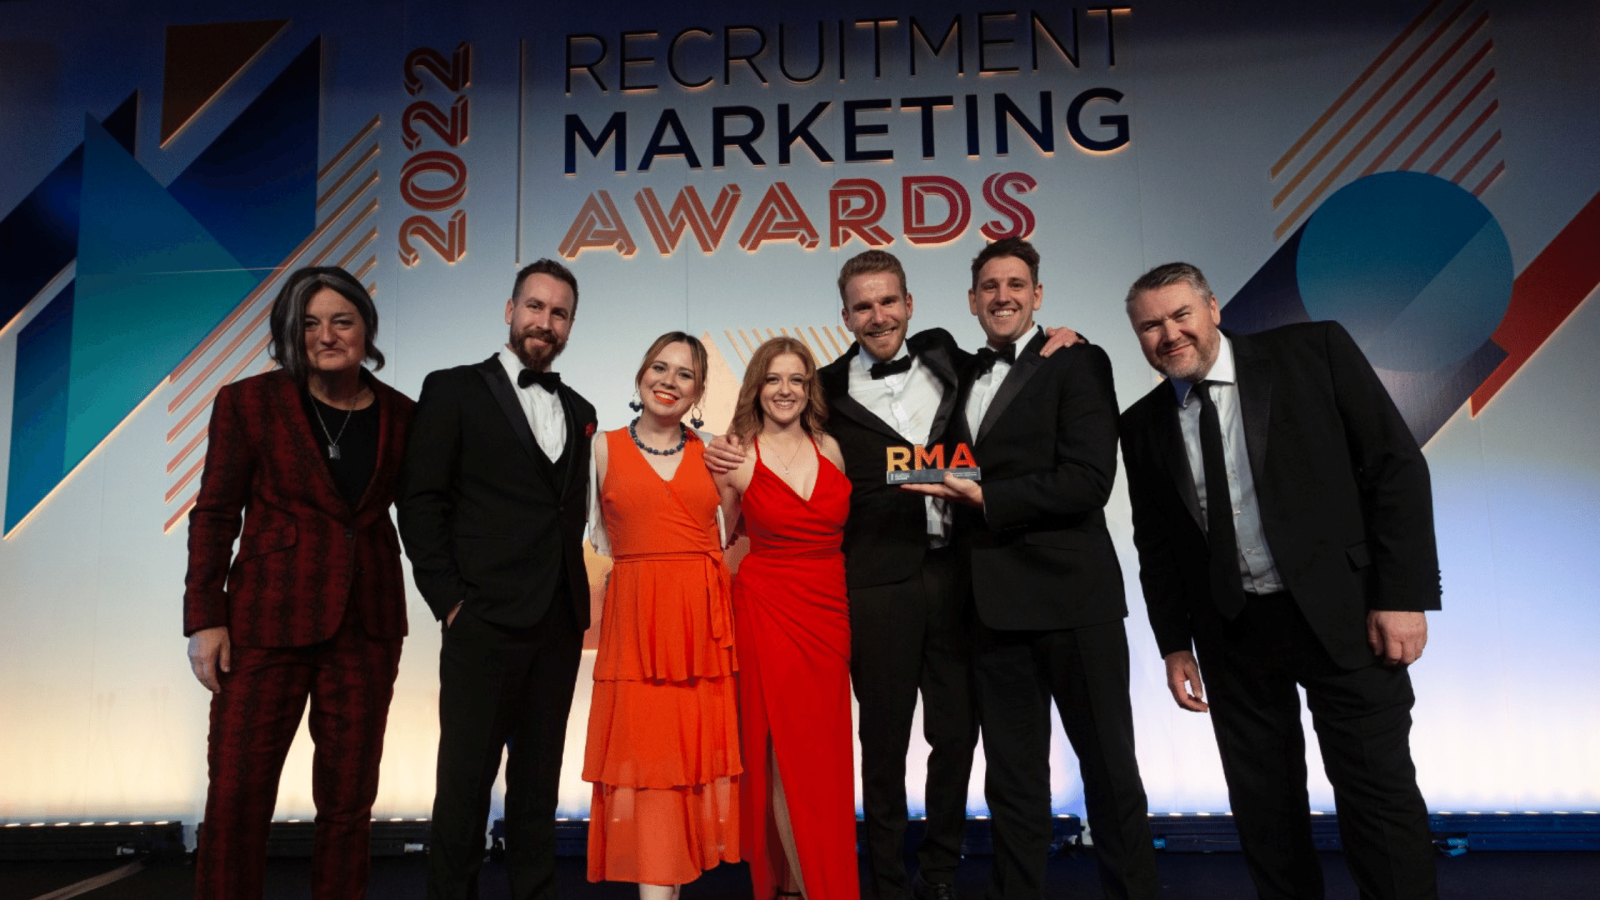 Recruitment Marketing Awards 2022 winners